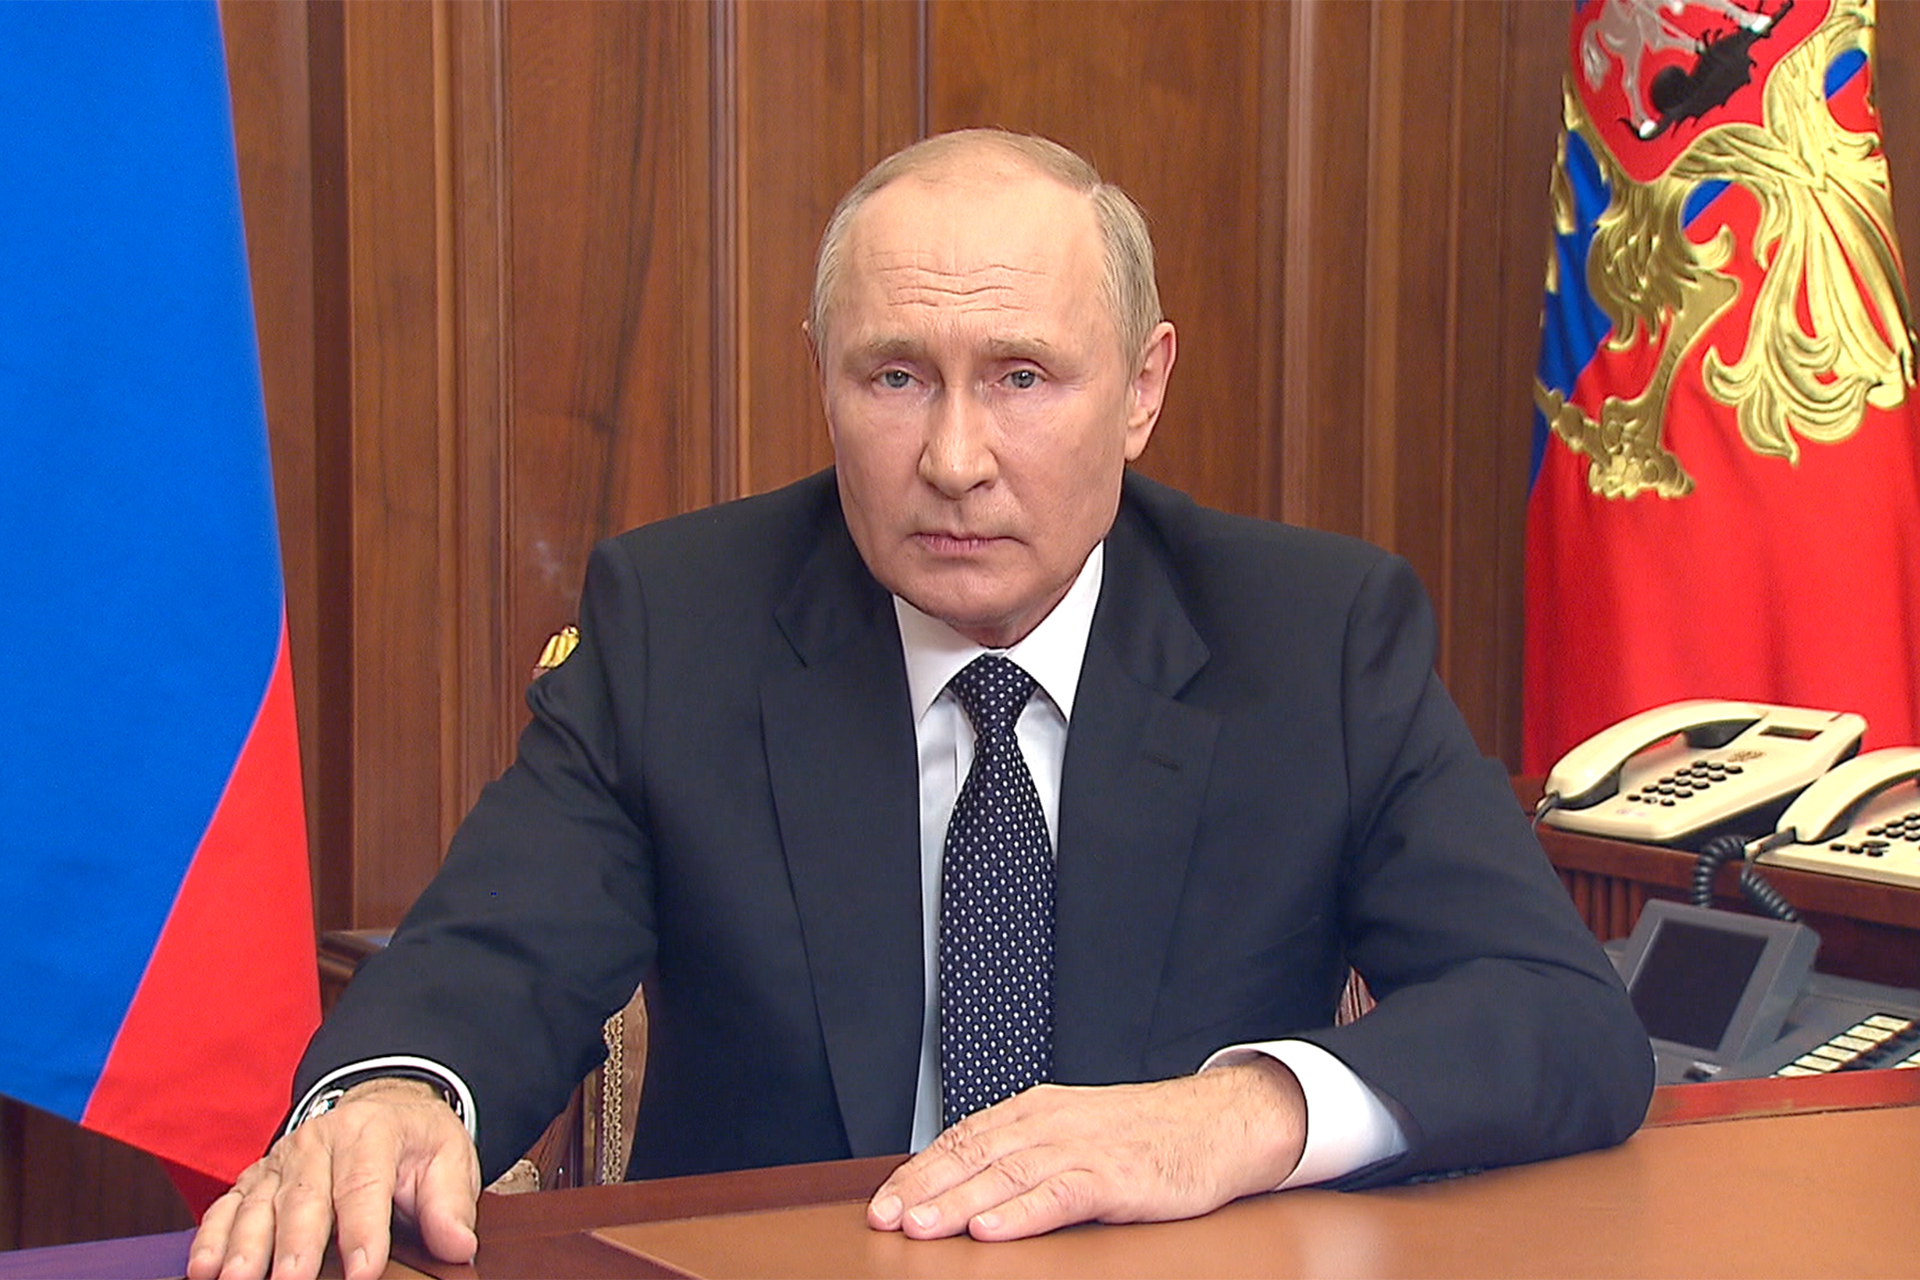 Bild: Kremlin.ru, Vladimir Putin (2022-09-21), CC BY 4.0, via Wikimedia Commons (Bildgröße geändert)